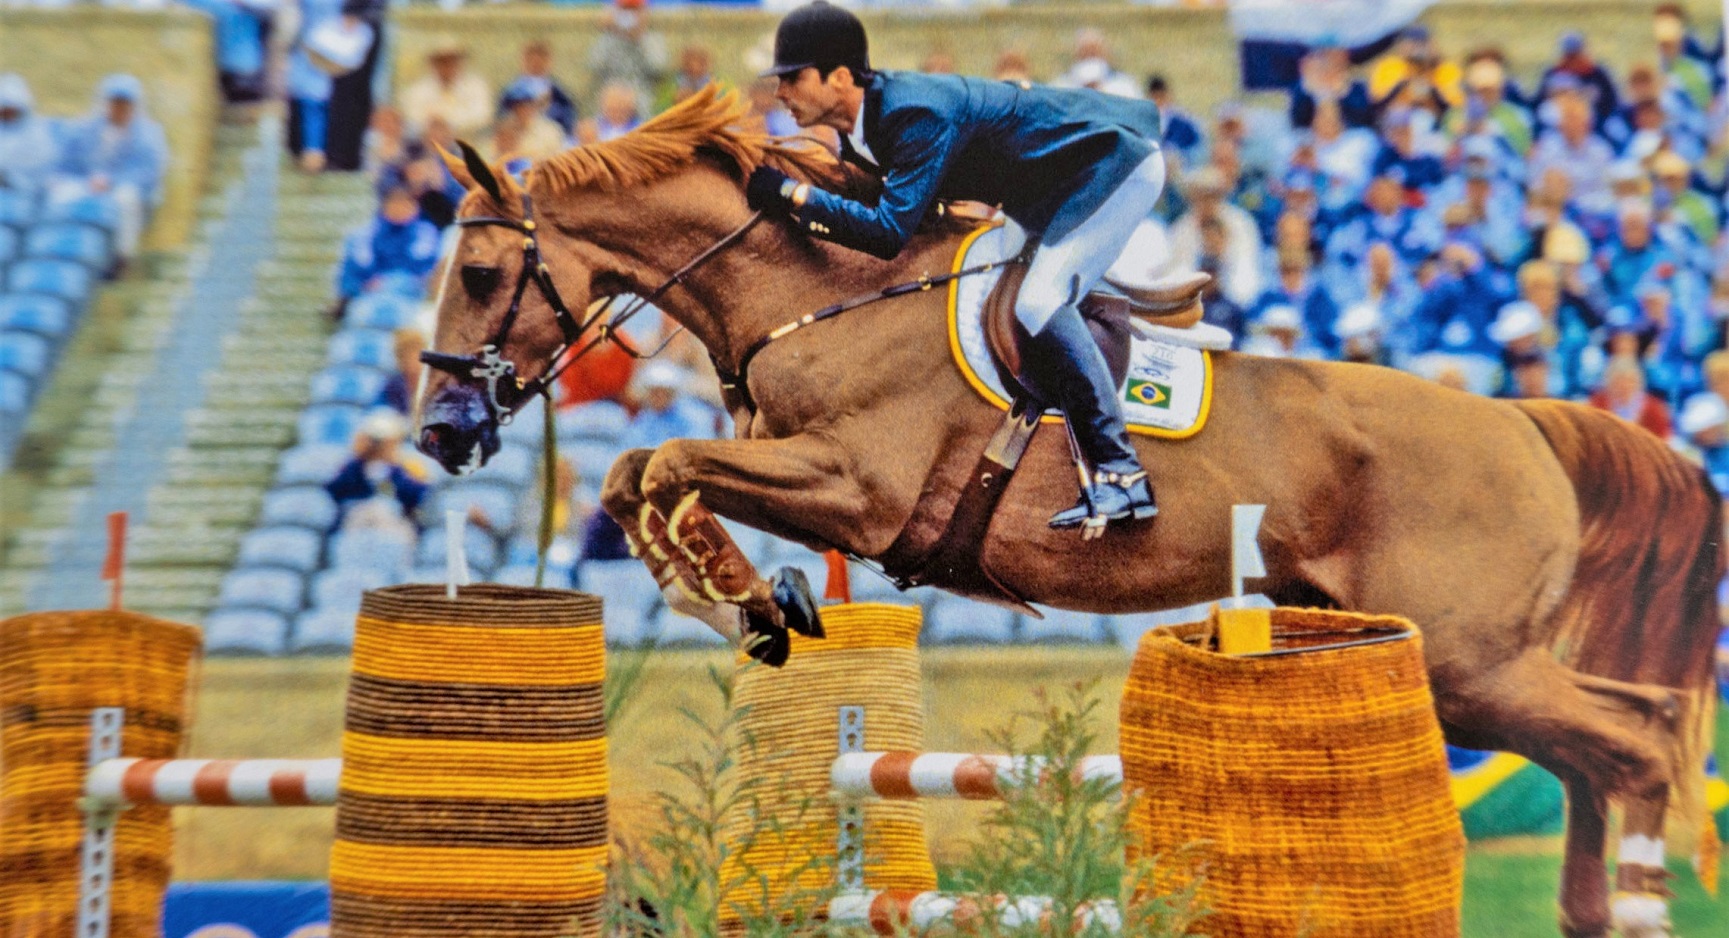 6 Facts & FAQs About Baloubet Du Rouet, Famous Show Jumping Horse